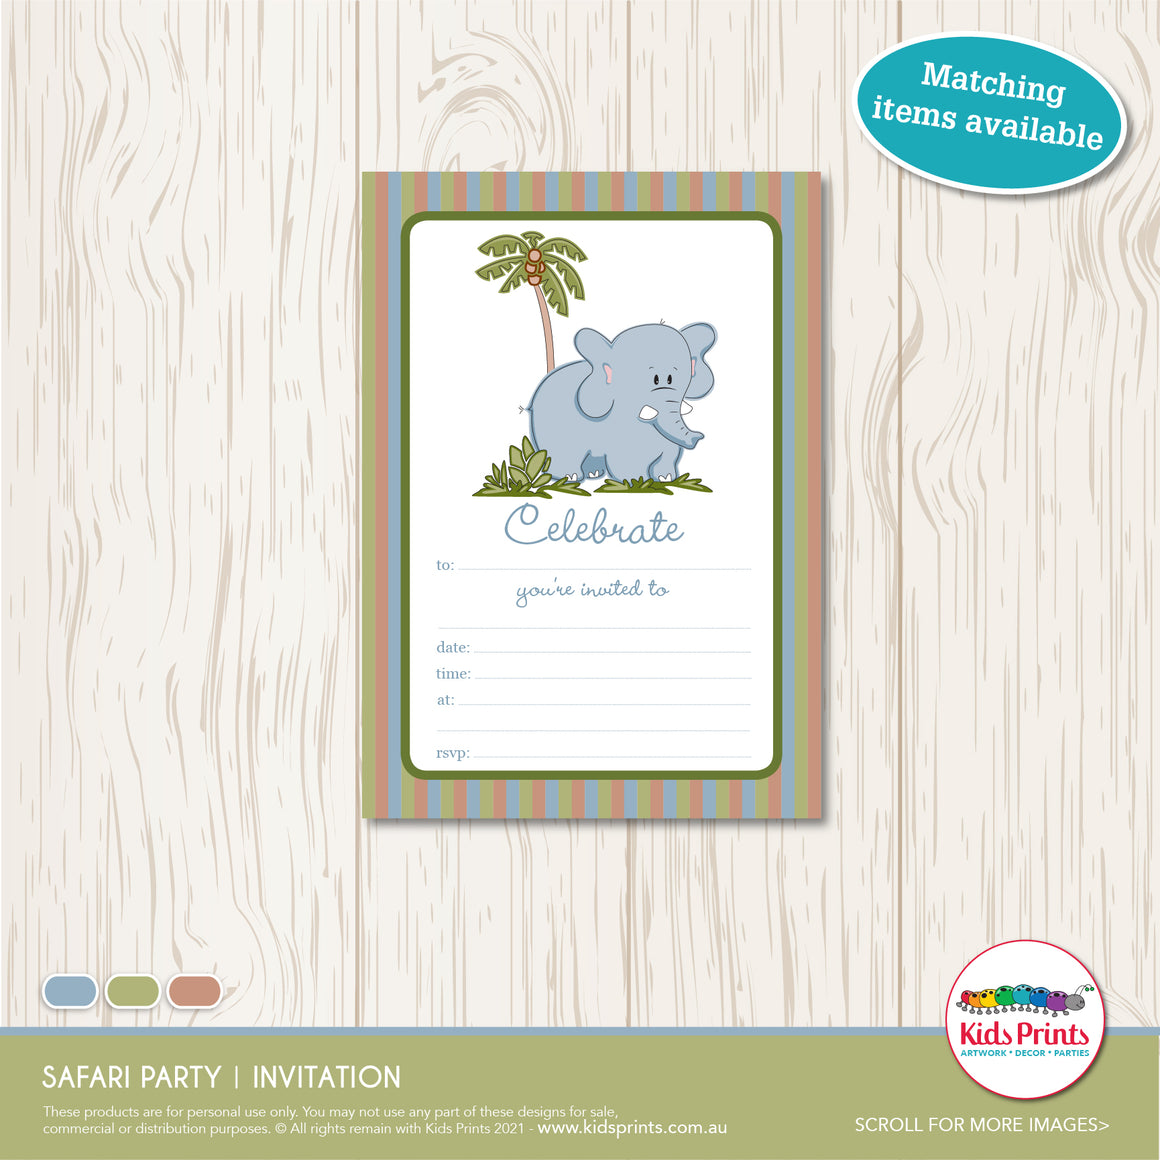 Safari Party | Invitation Elephant | Kids Prints